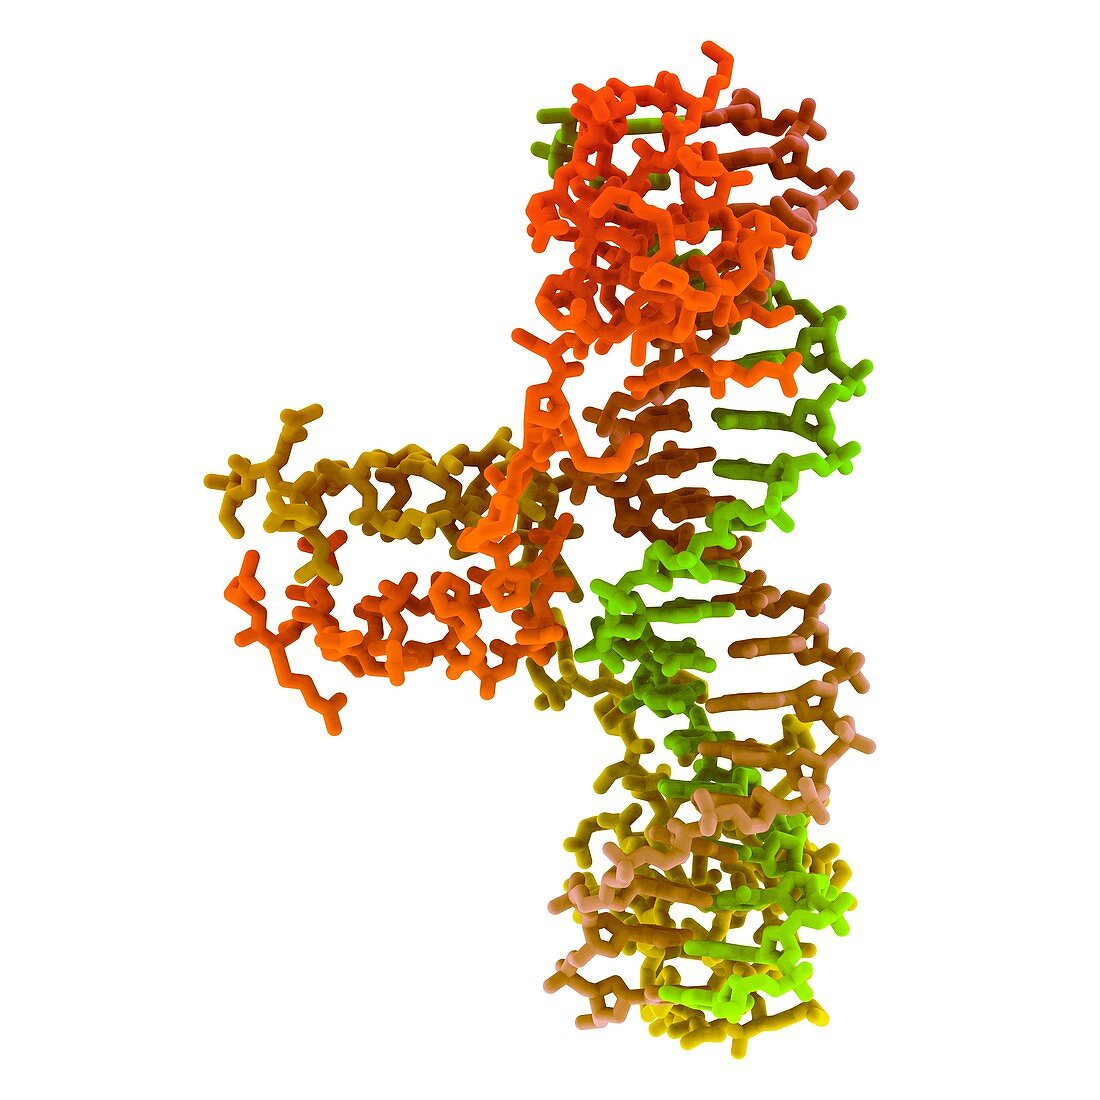 GAL4p activator protein